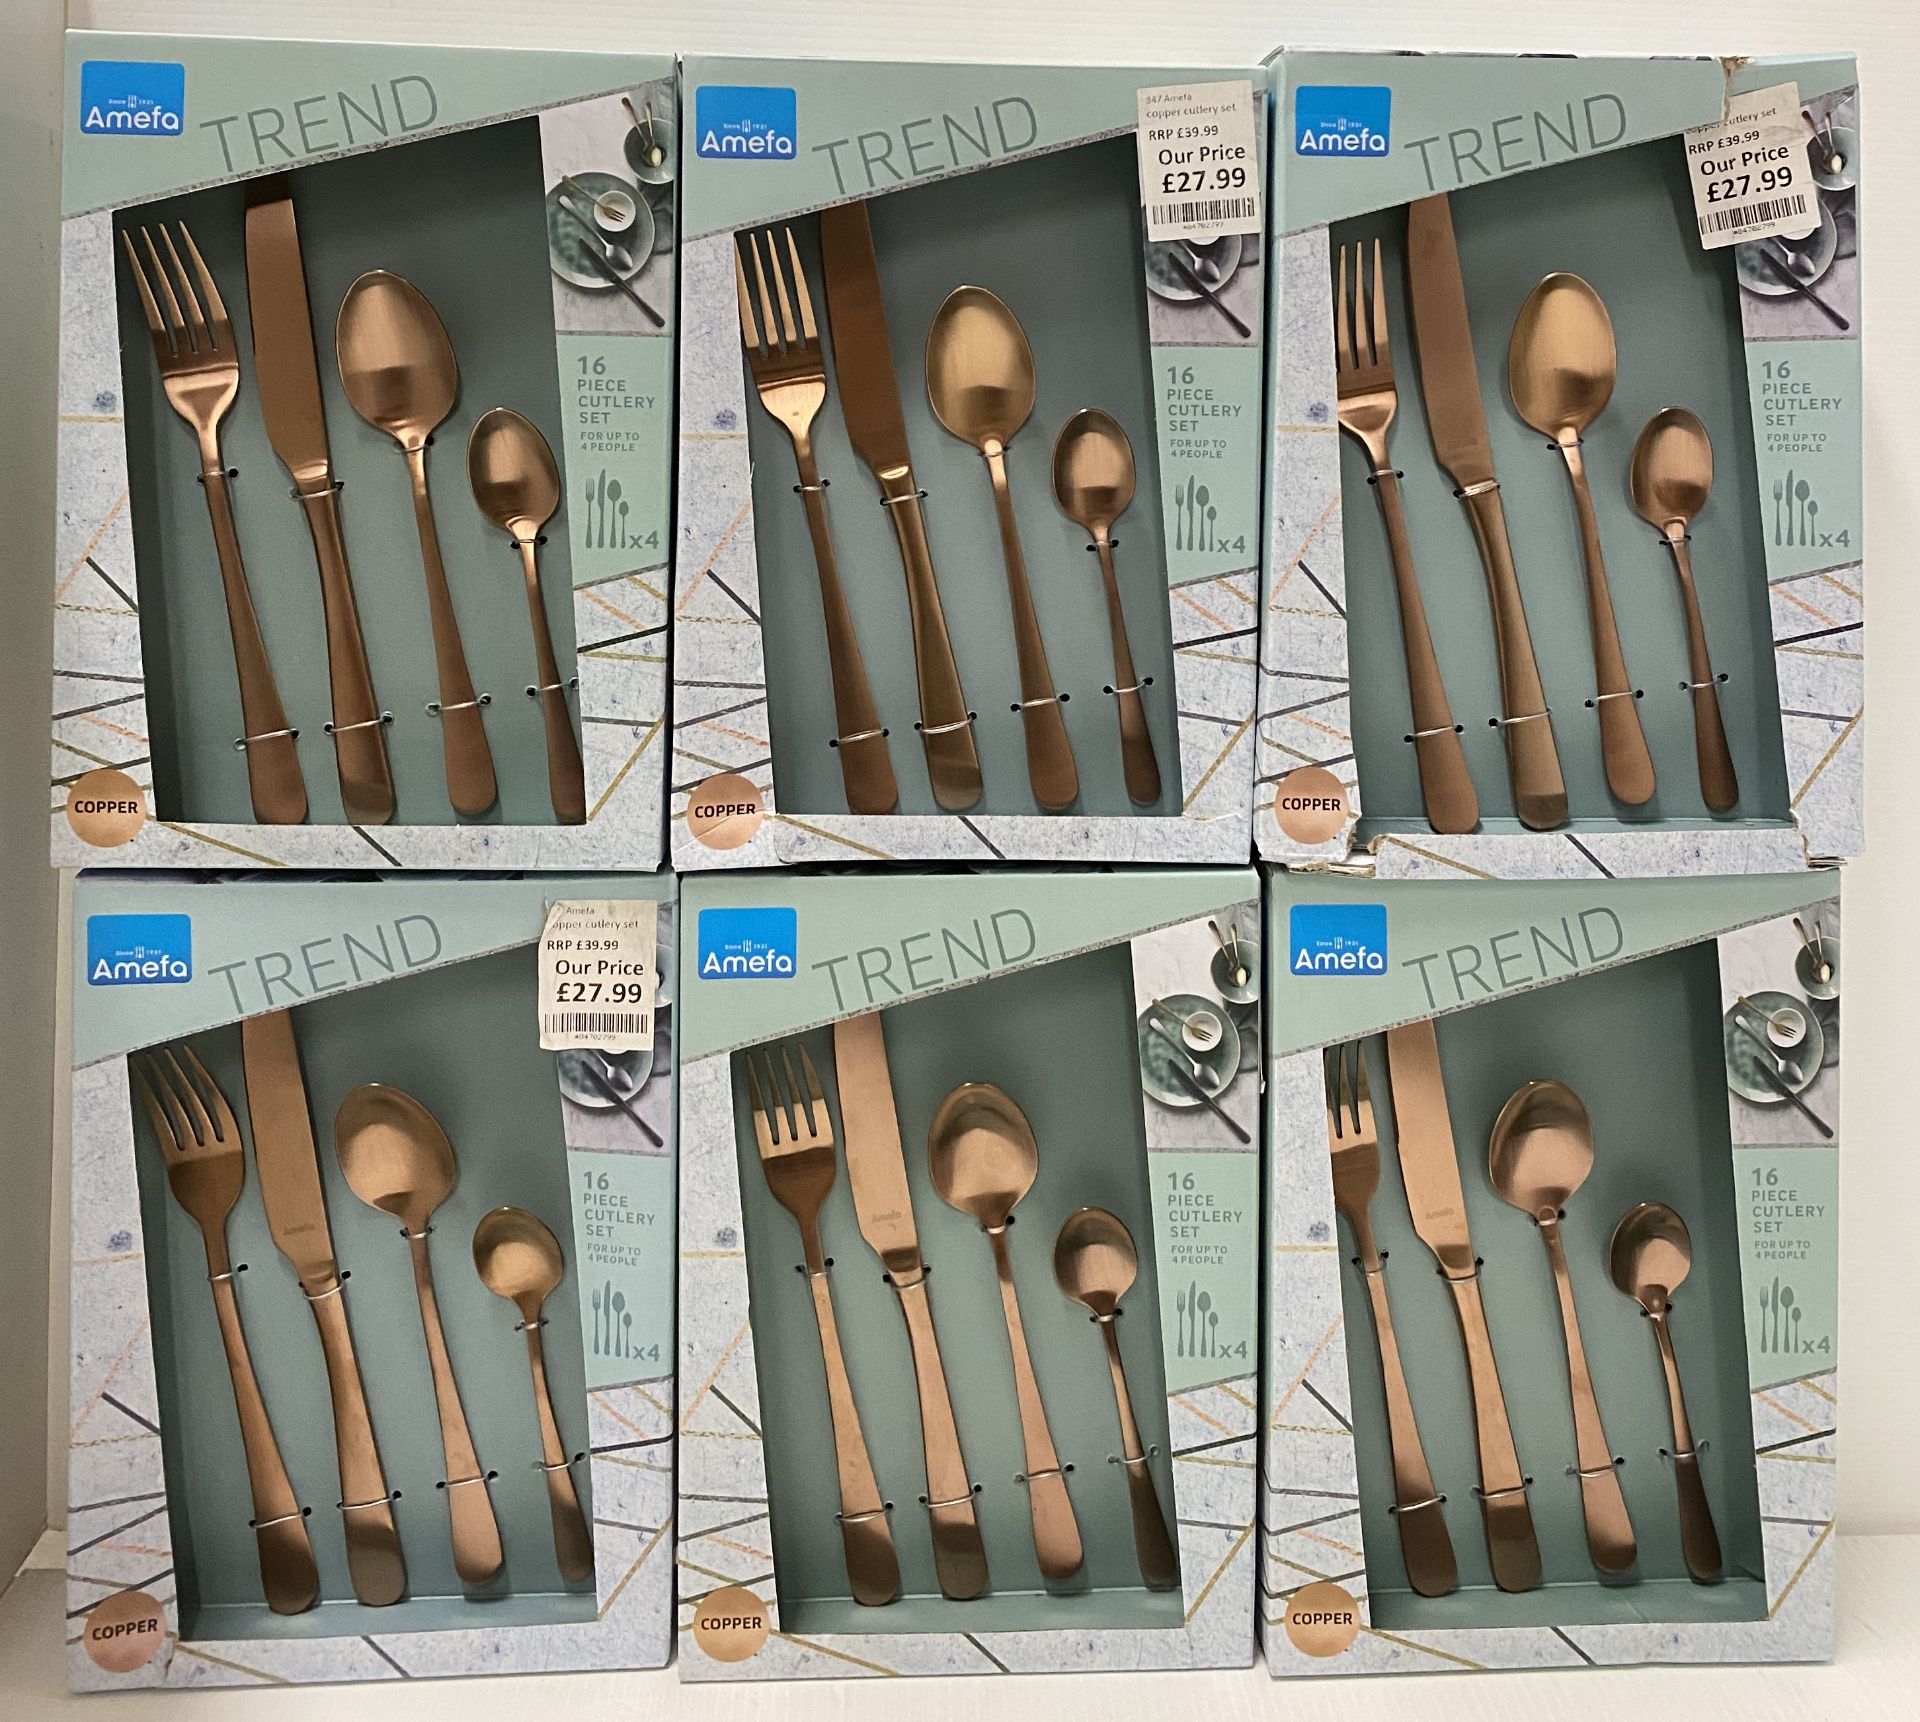 6 x Amefa Trend 16 piece Copper cutlery sets RRP £39.